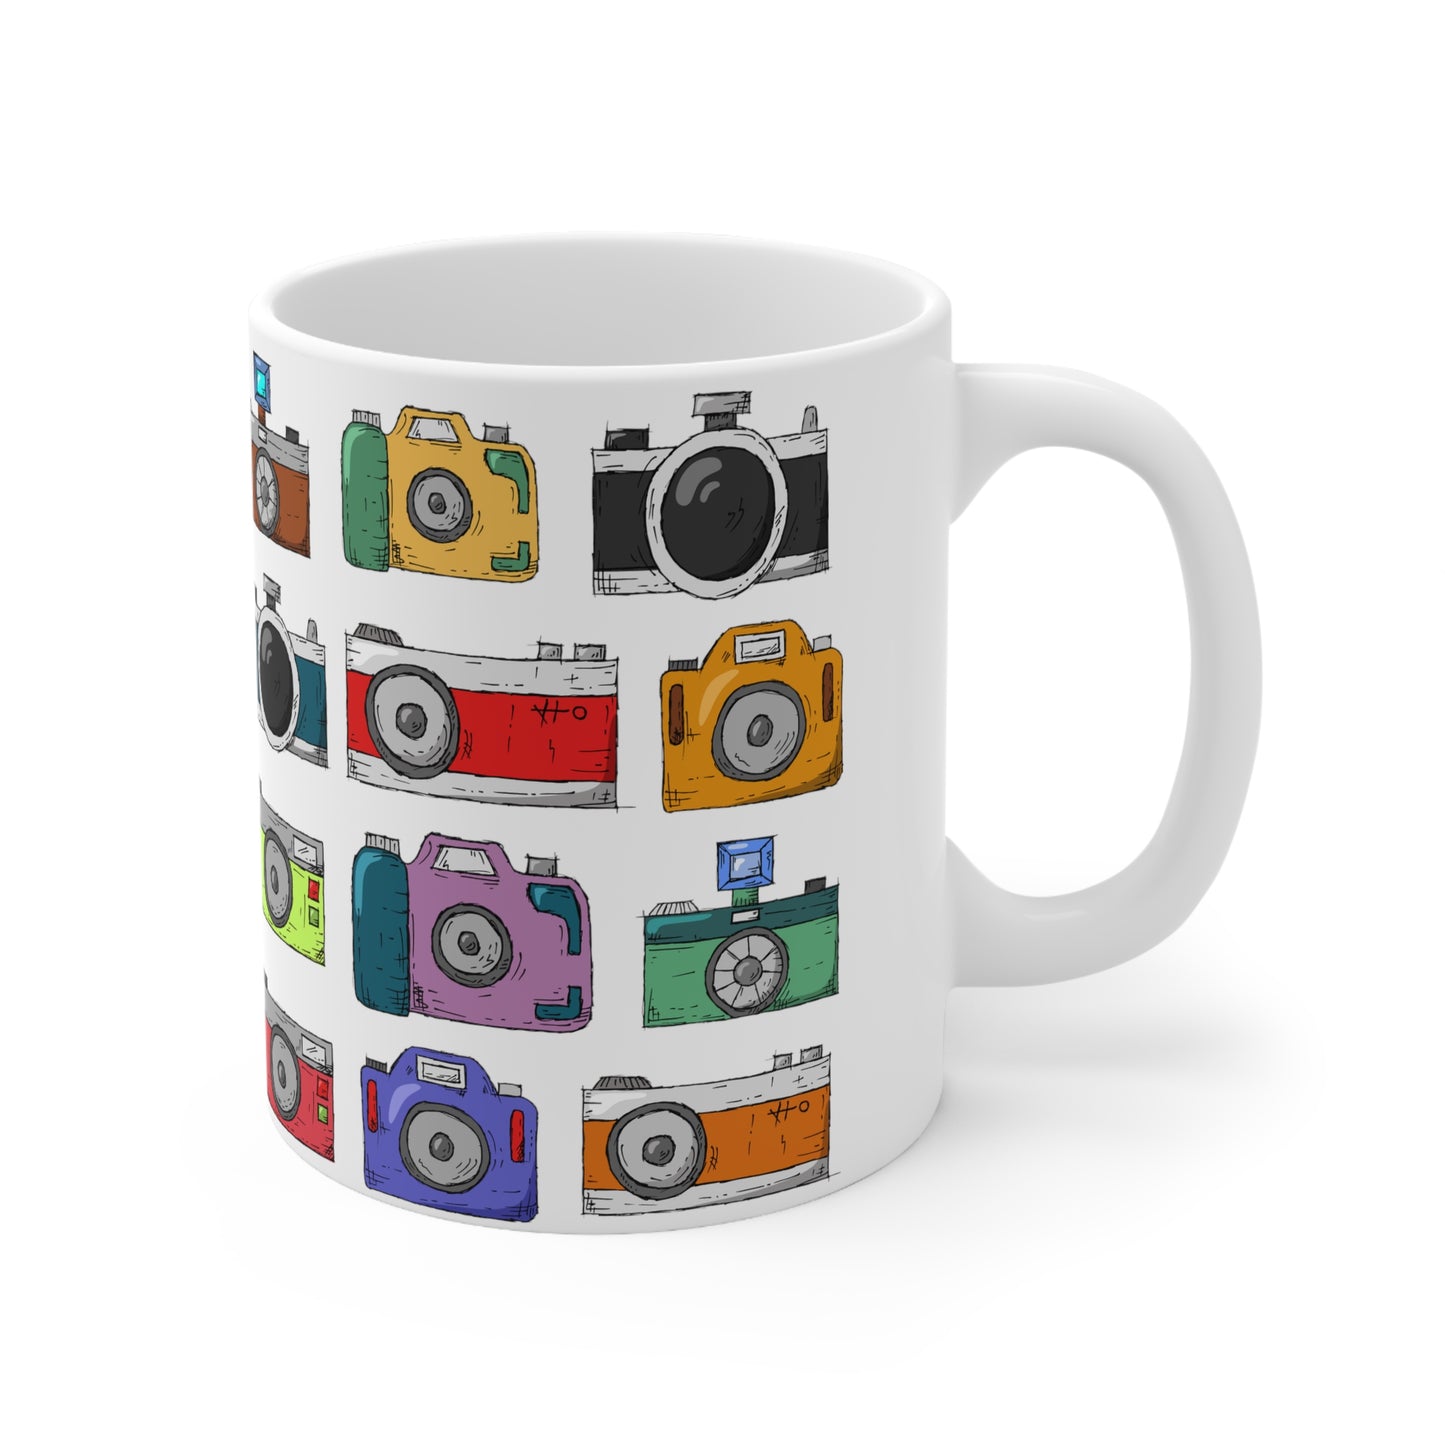 Capture Memories with Our Camera Variety Mug! #Mug #Camera #Photo